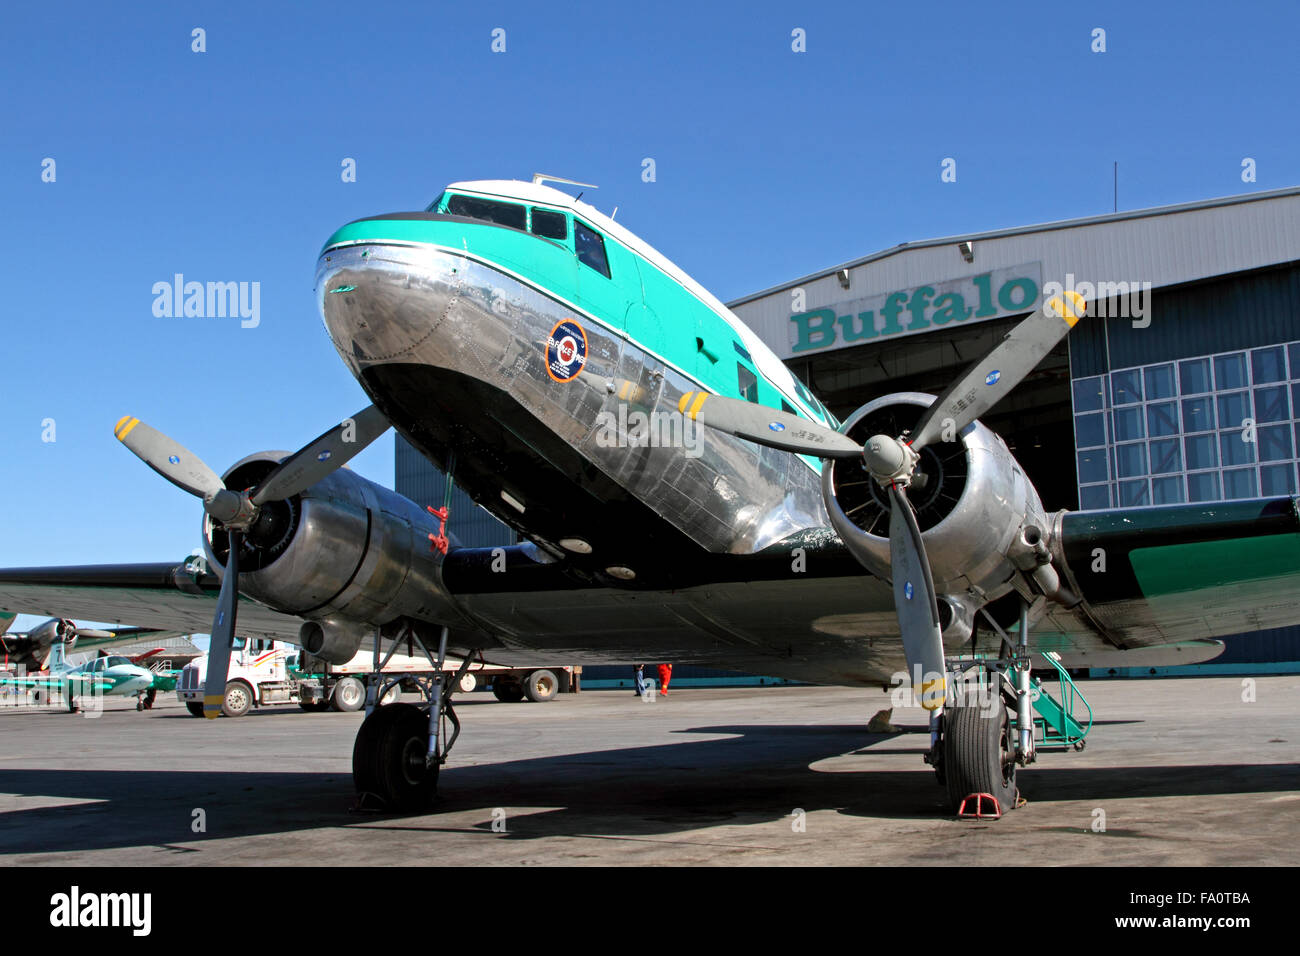 Douglas at Buffalo Airways, Yellowknife, NWT, Canada Stock Photo - Alamy